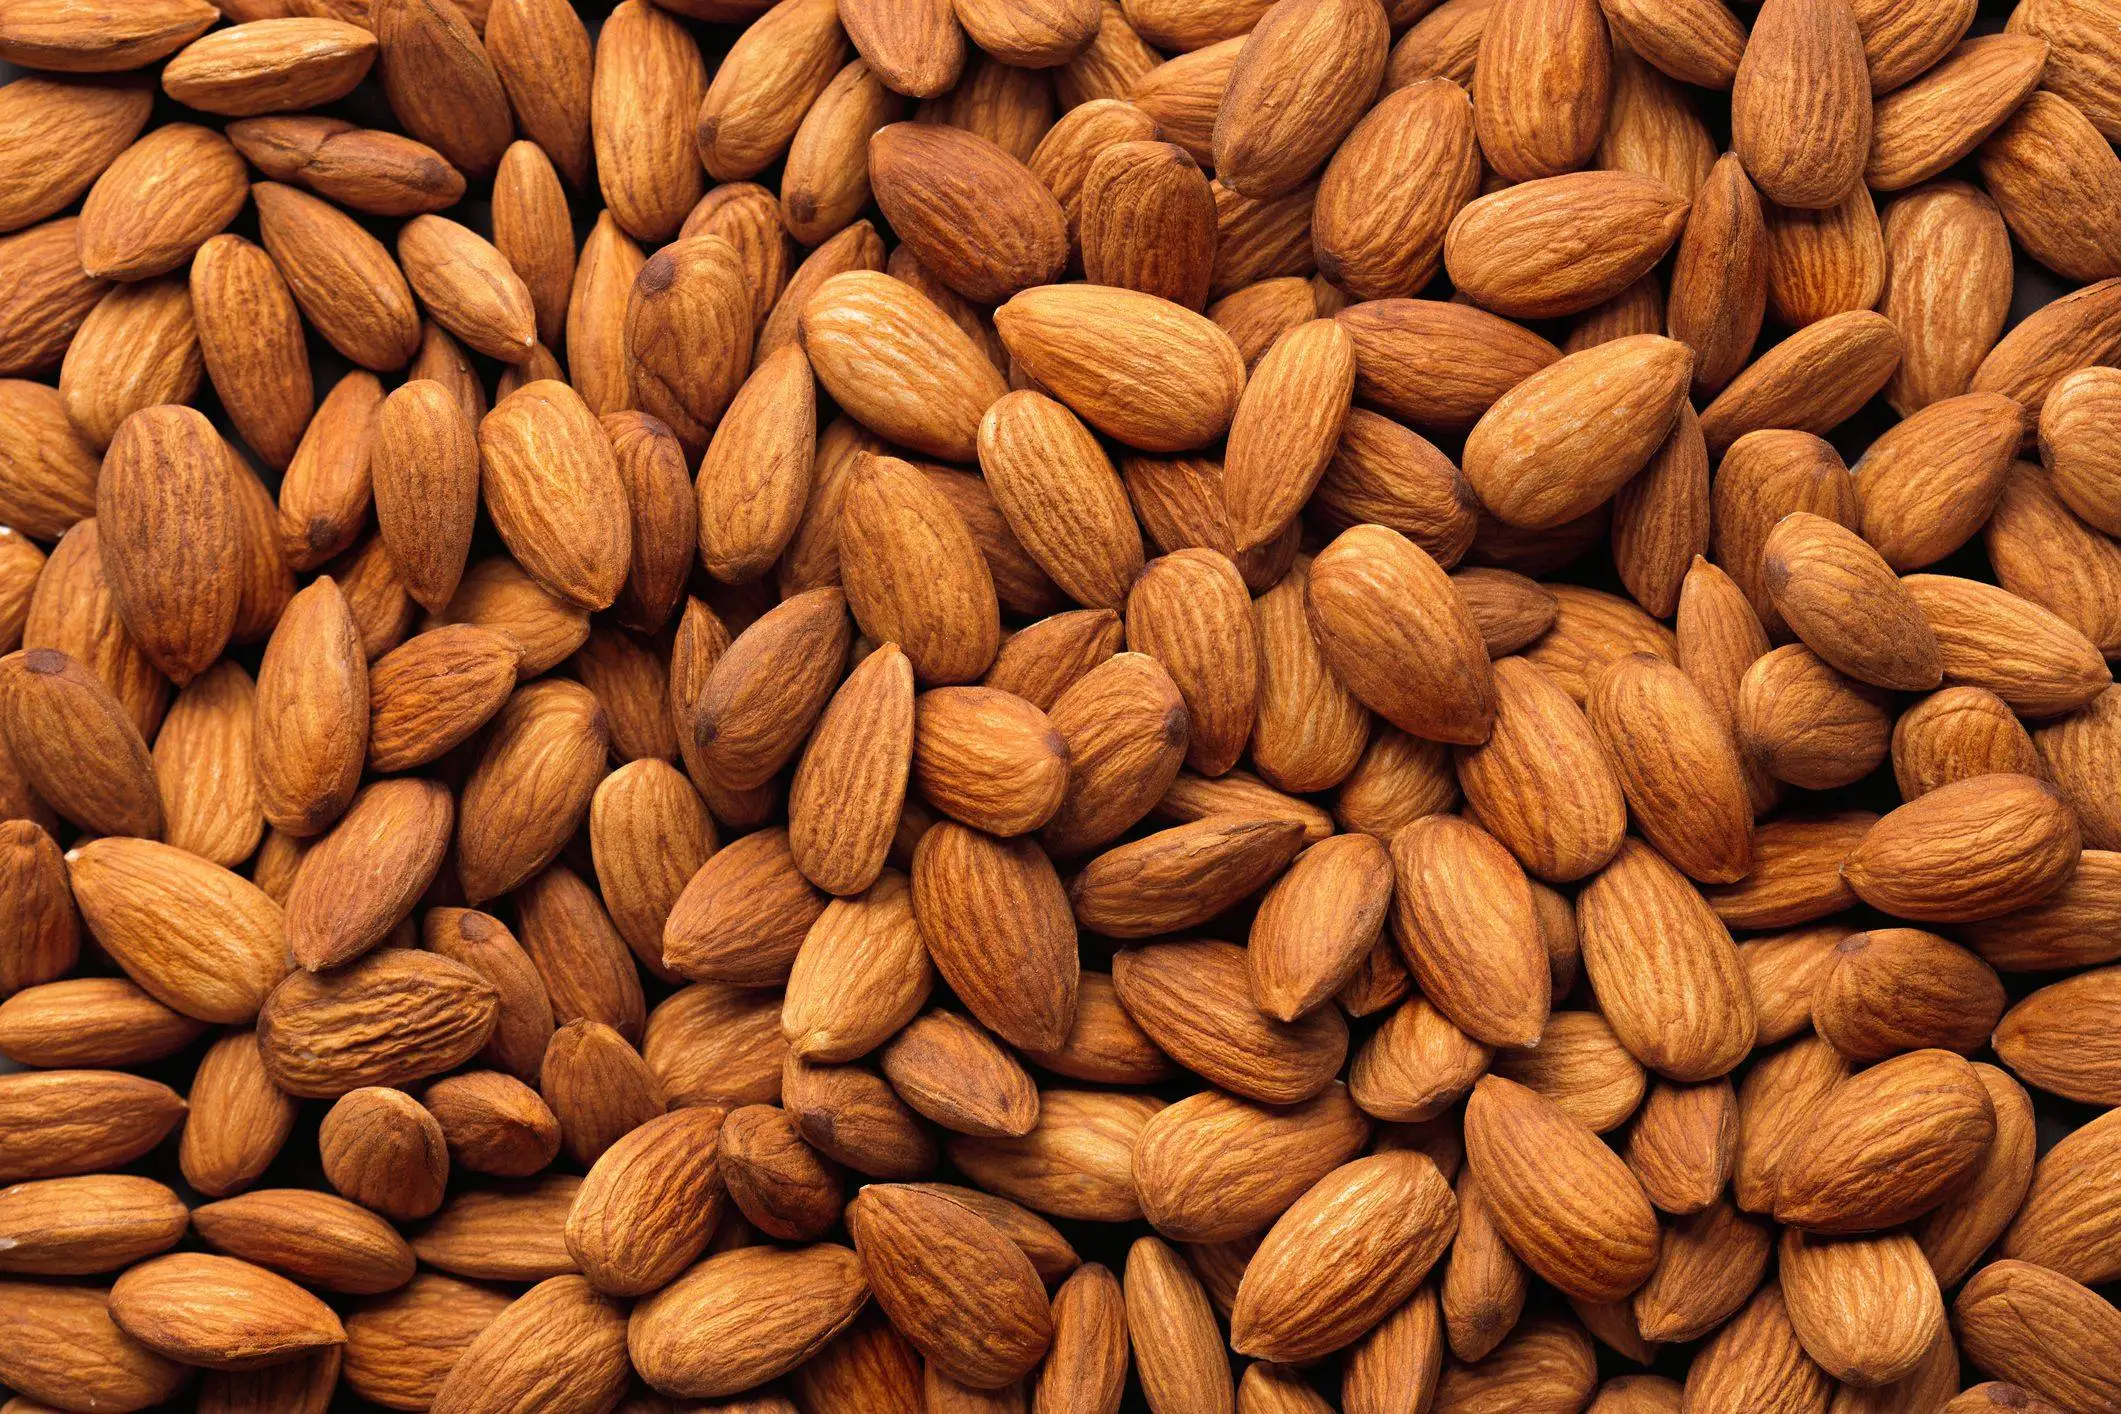 bulgaria almond nuts healthy snack keto diet